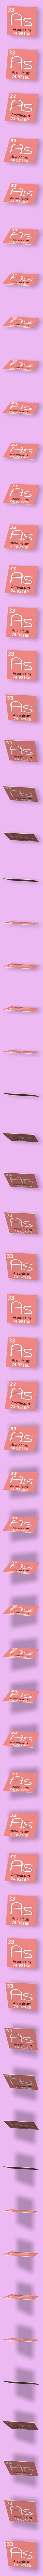 Arsenic element #33/118